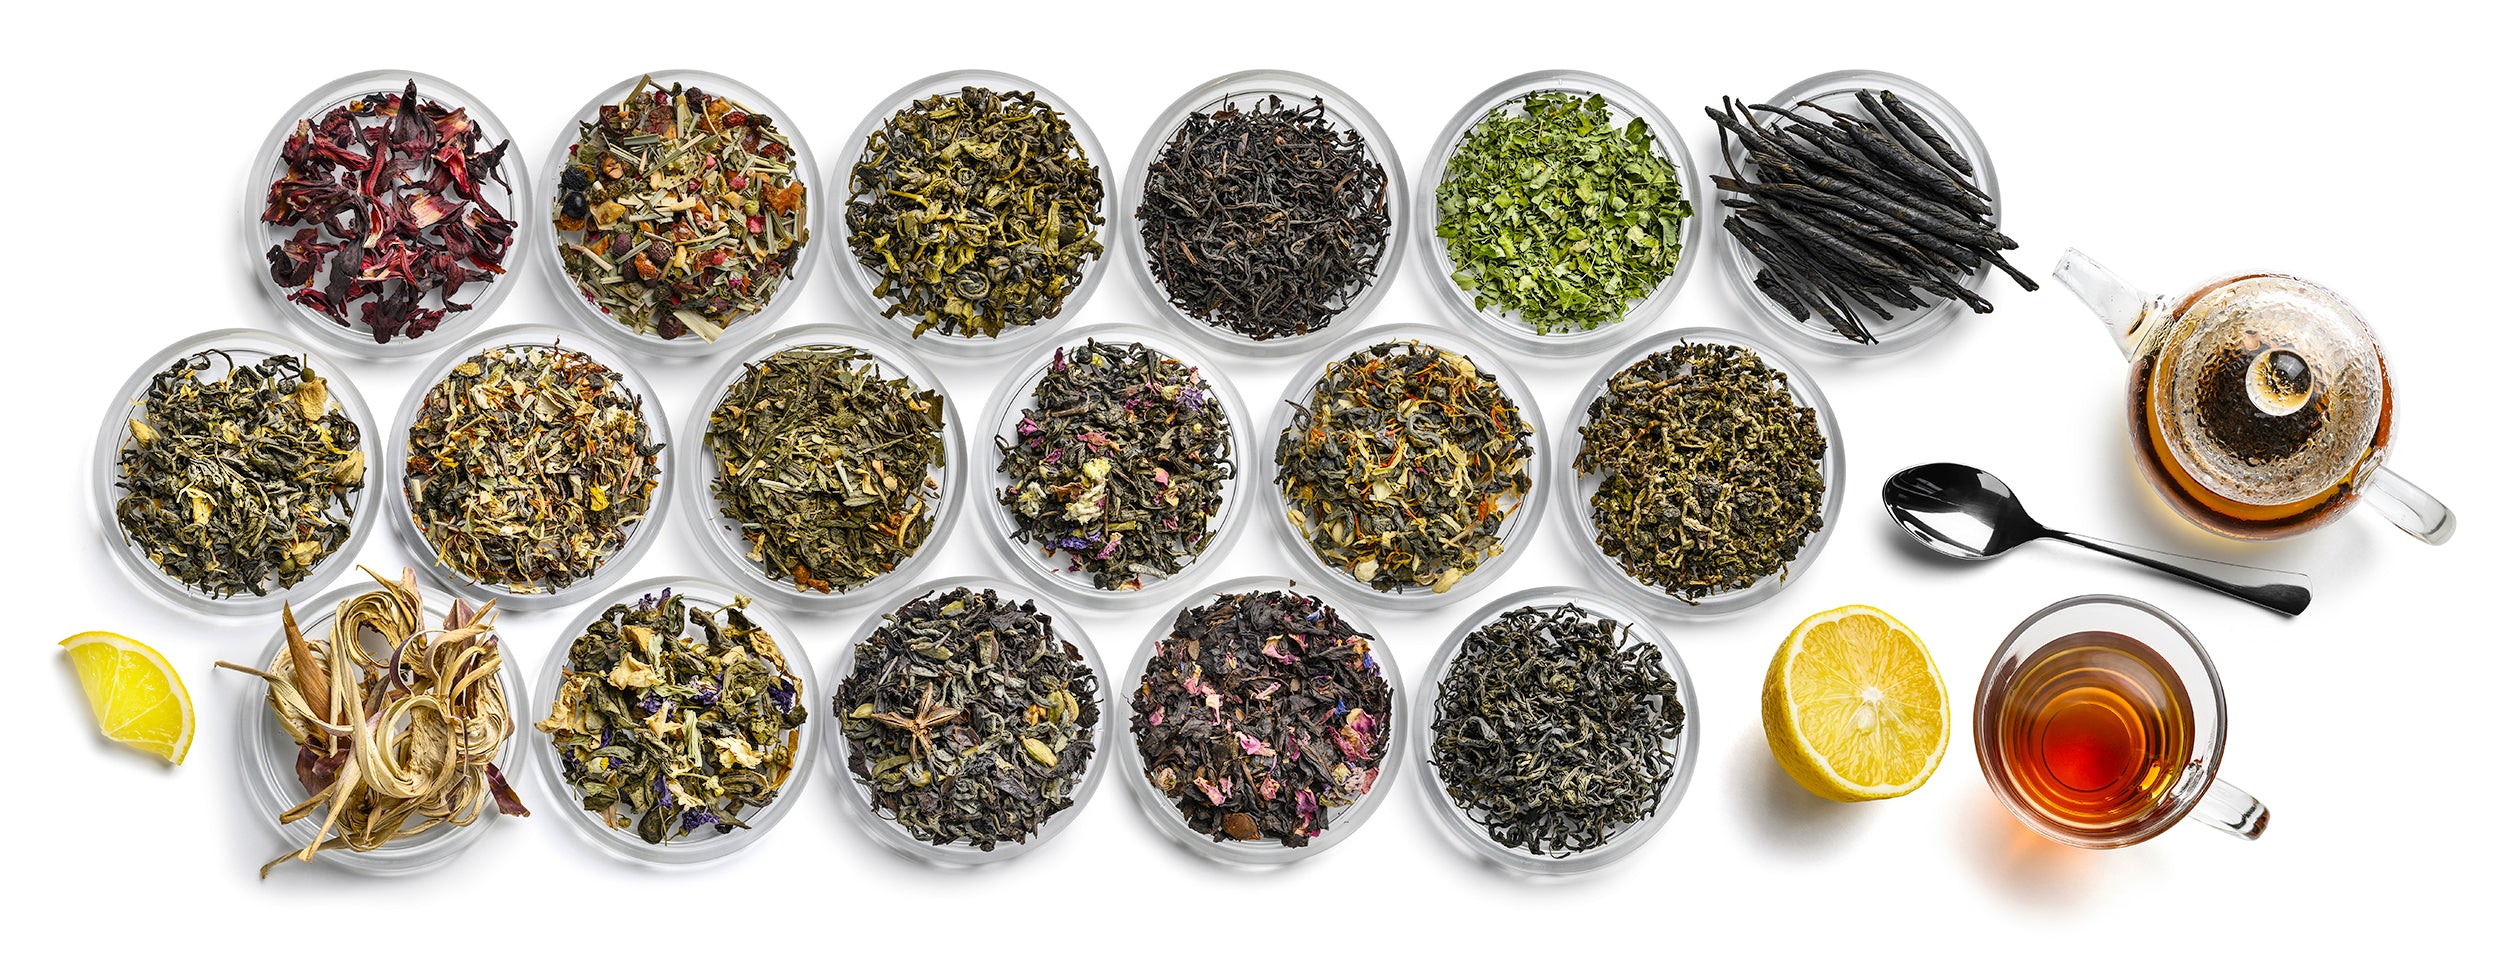 Uptown Tea Shop - Premium Teas and Accessories - Complete Tea Collection